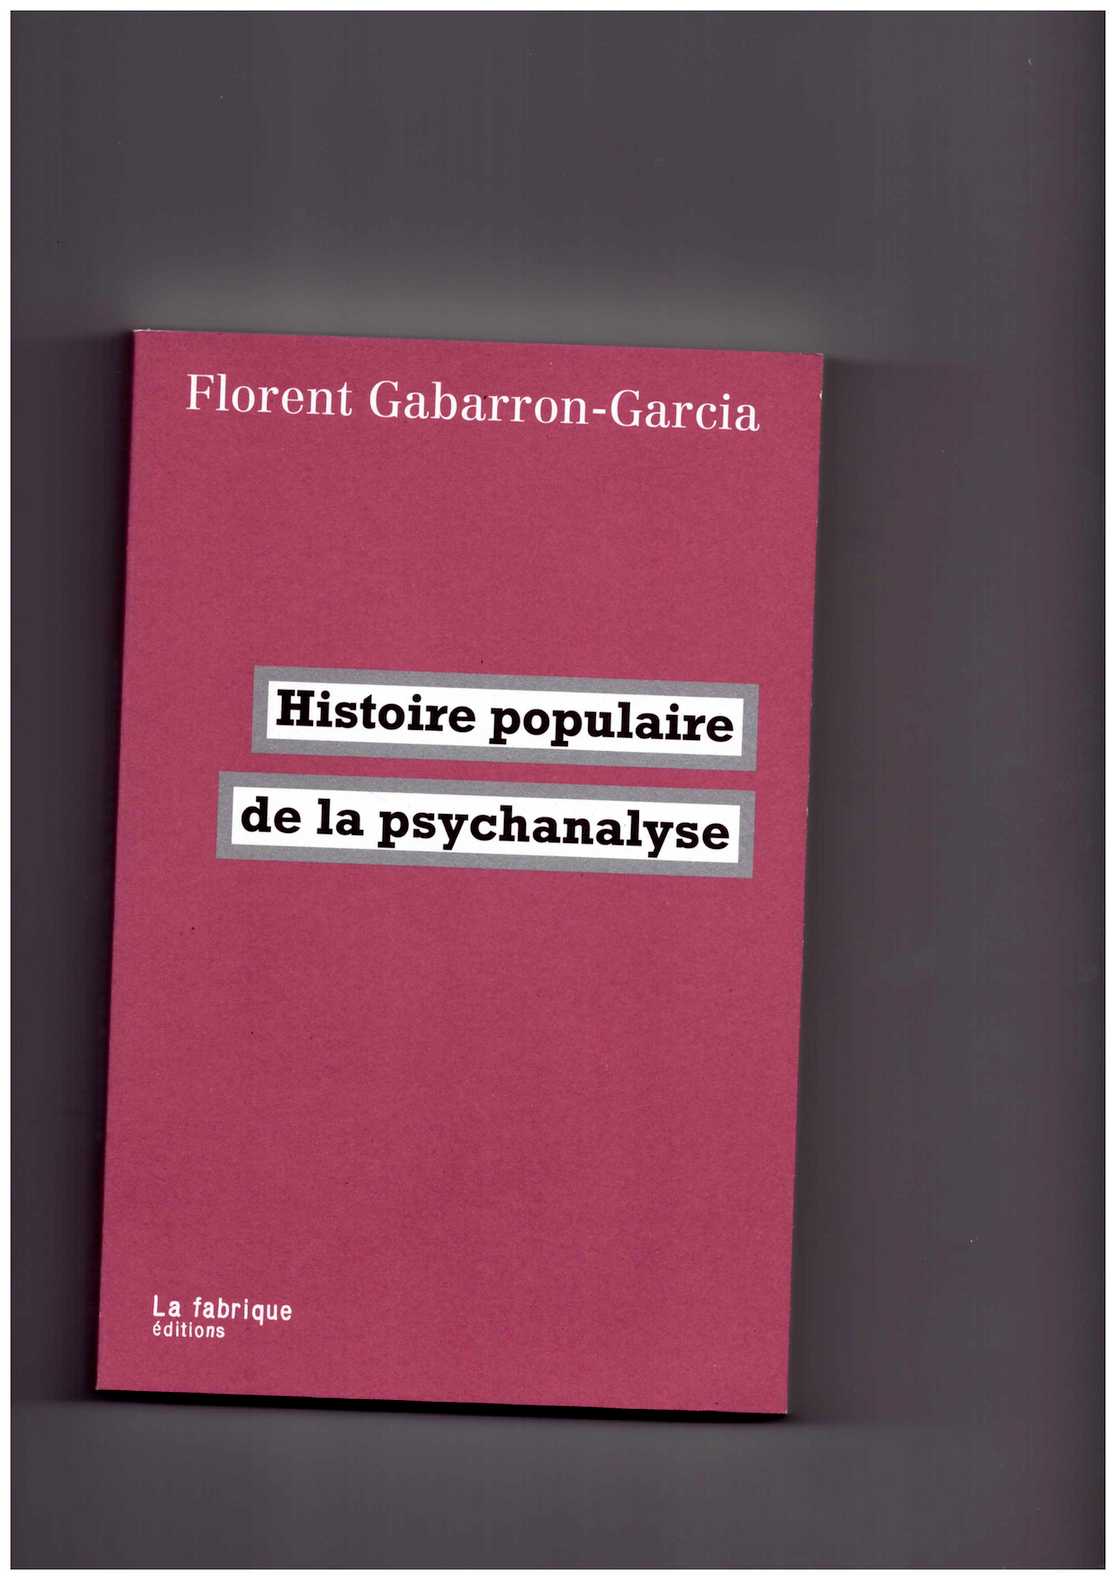 GABARAON-GARCIA, Florent - Histoire populaire de la psychanalyse